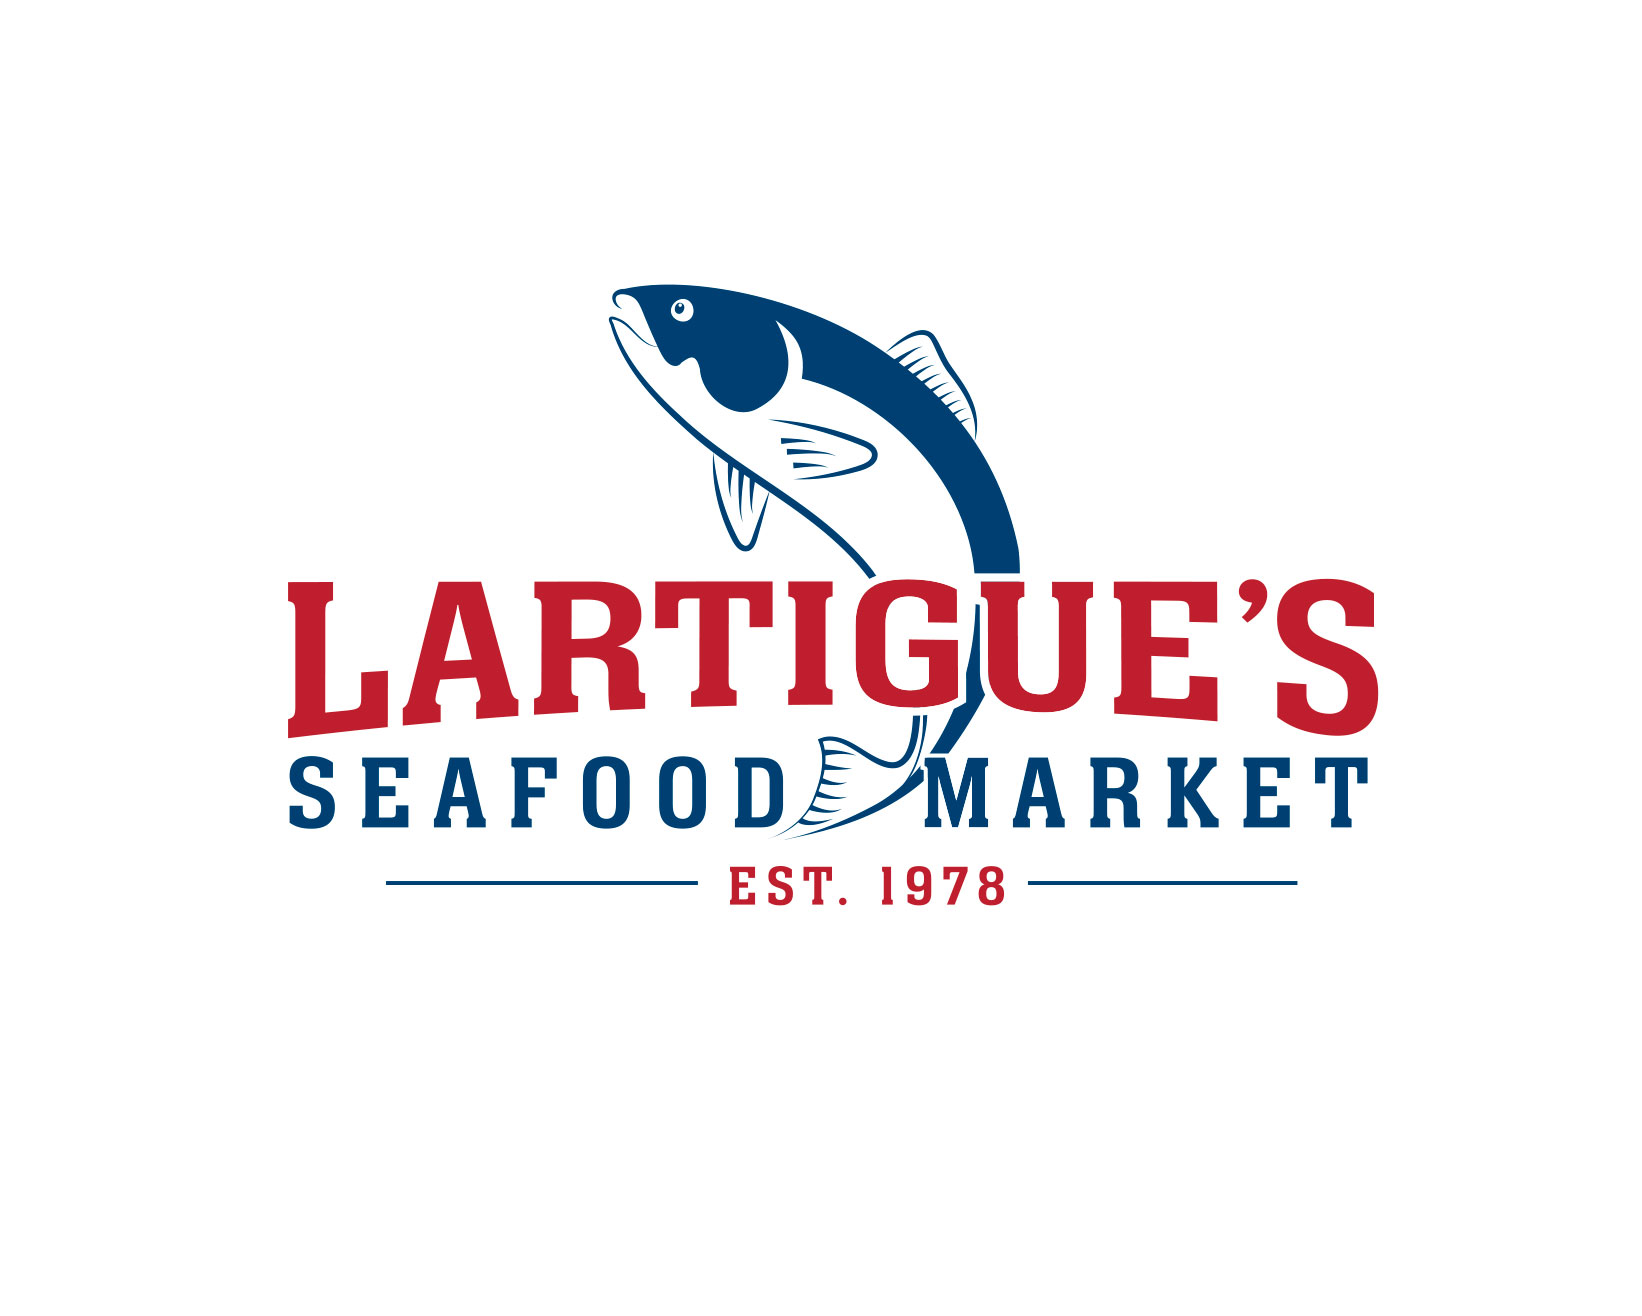 Lartigue's Seafood Market